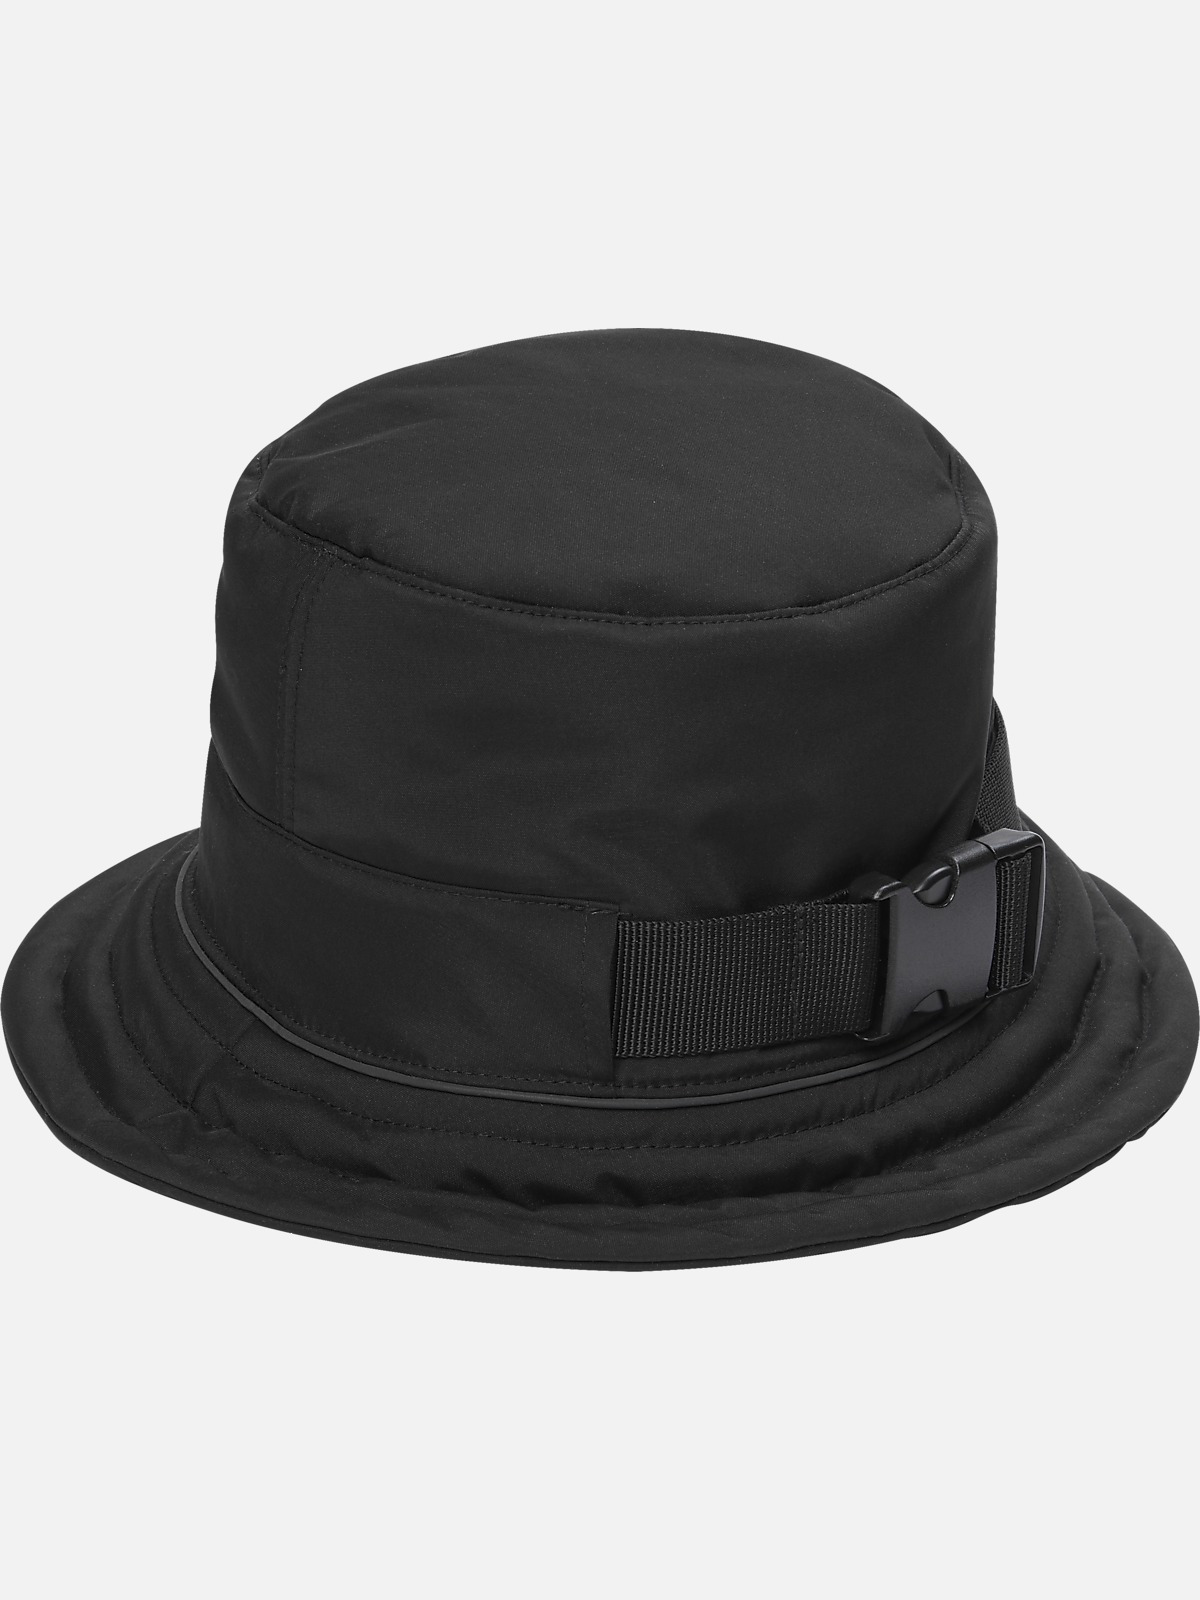 Pronto Uomo Bucket Hat | All Sale| Men's Wearhouse